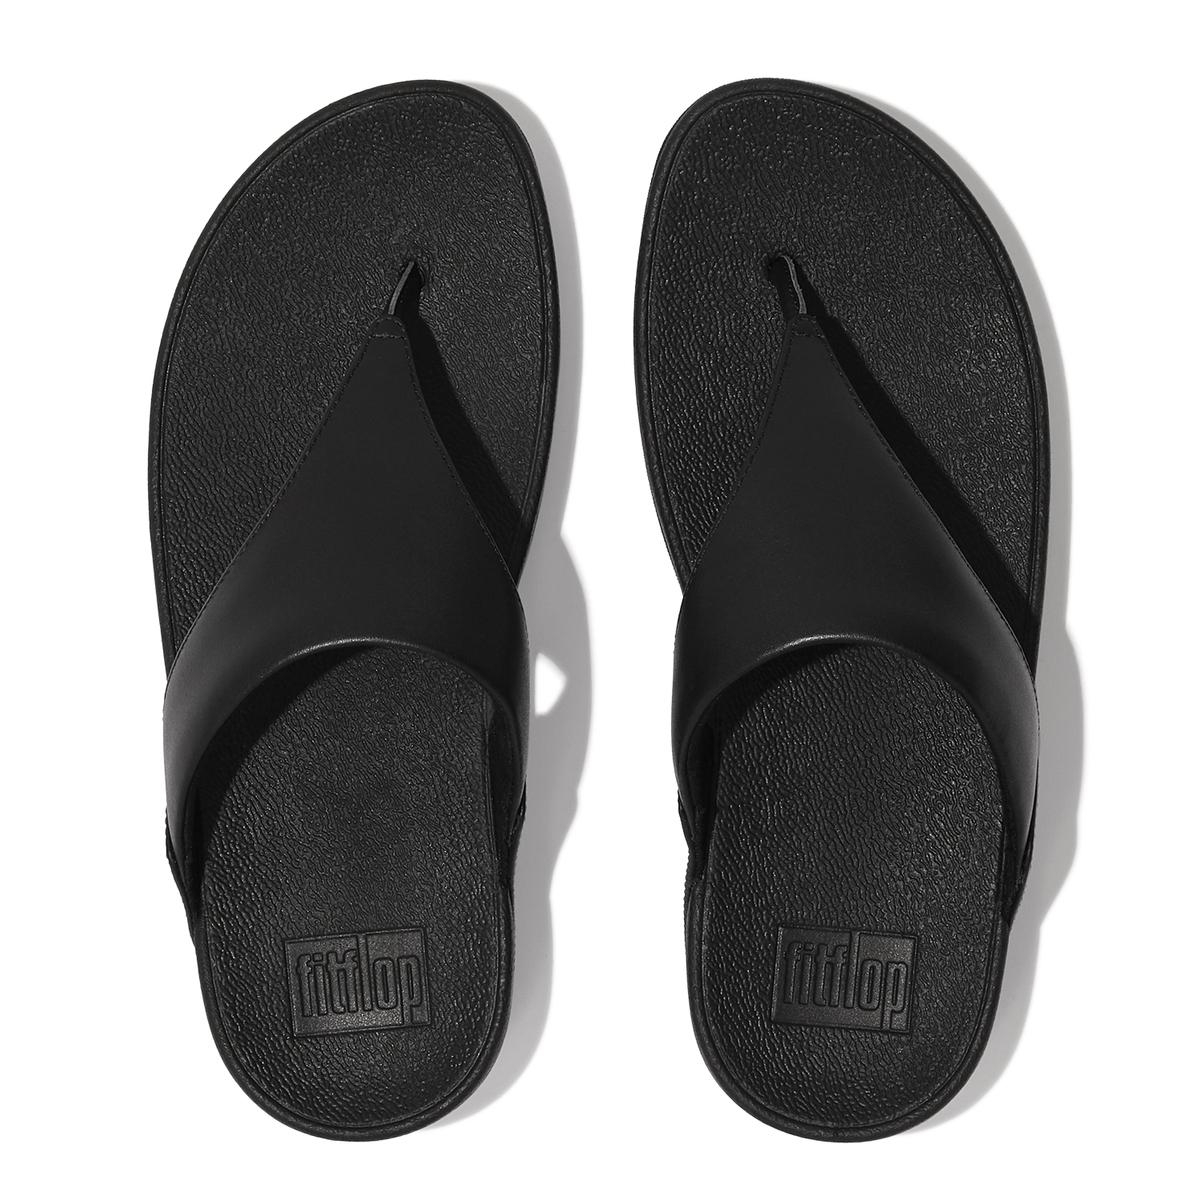 Buy FitFlop Lulu Leather Toepost Online | SKU: 228-132-11-3 - Metro Shoes